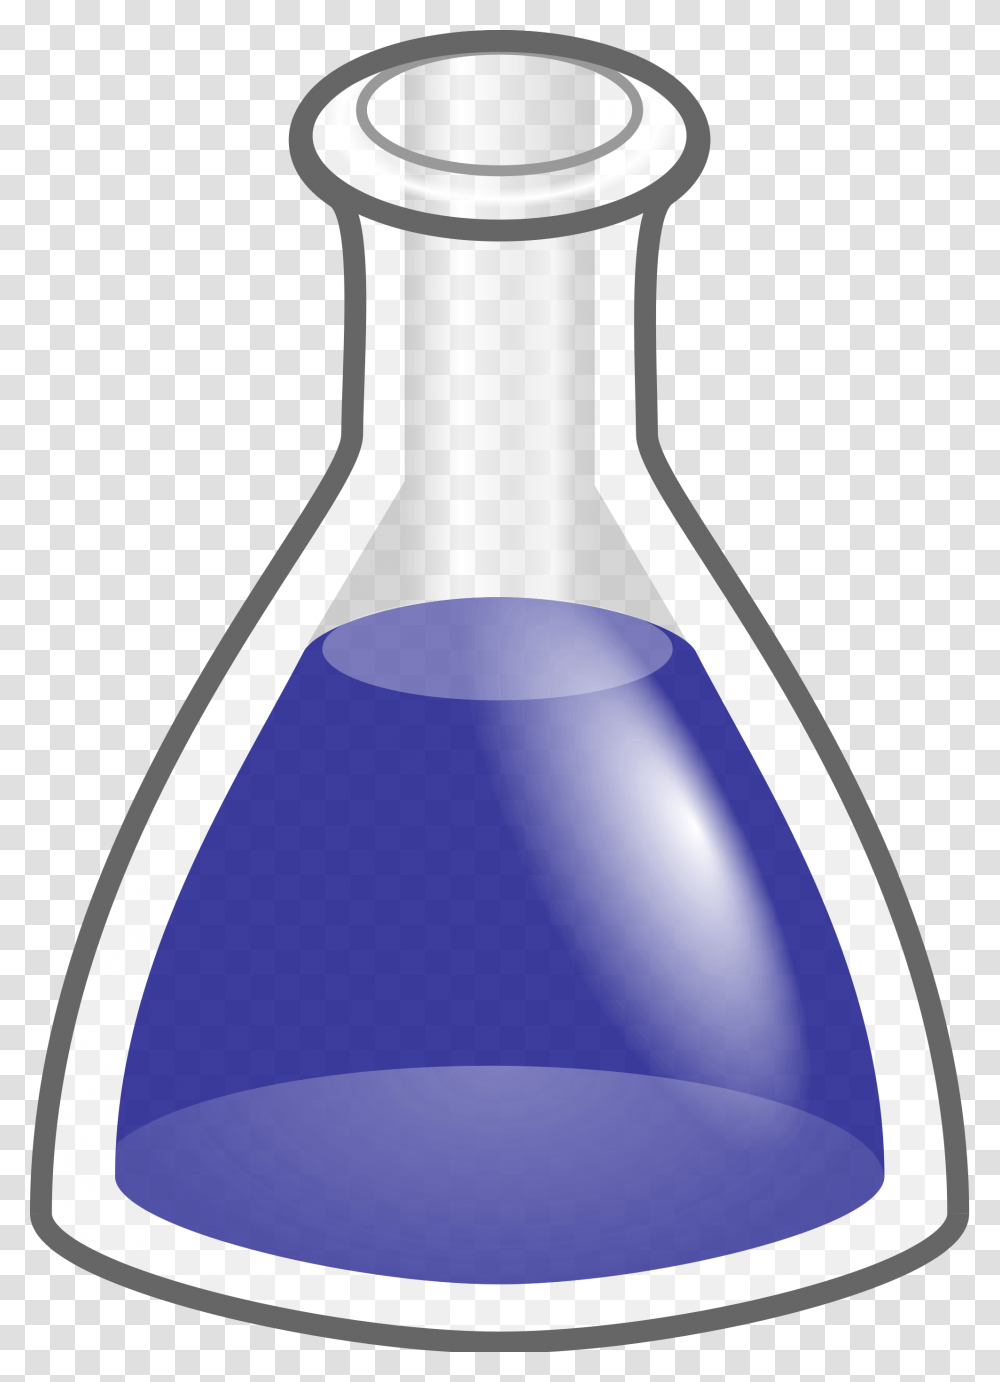 Beaker Clipart, Lamp, Shaker, Bottle, Jug Transparent Png